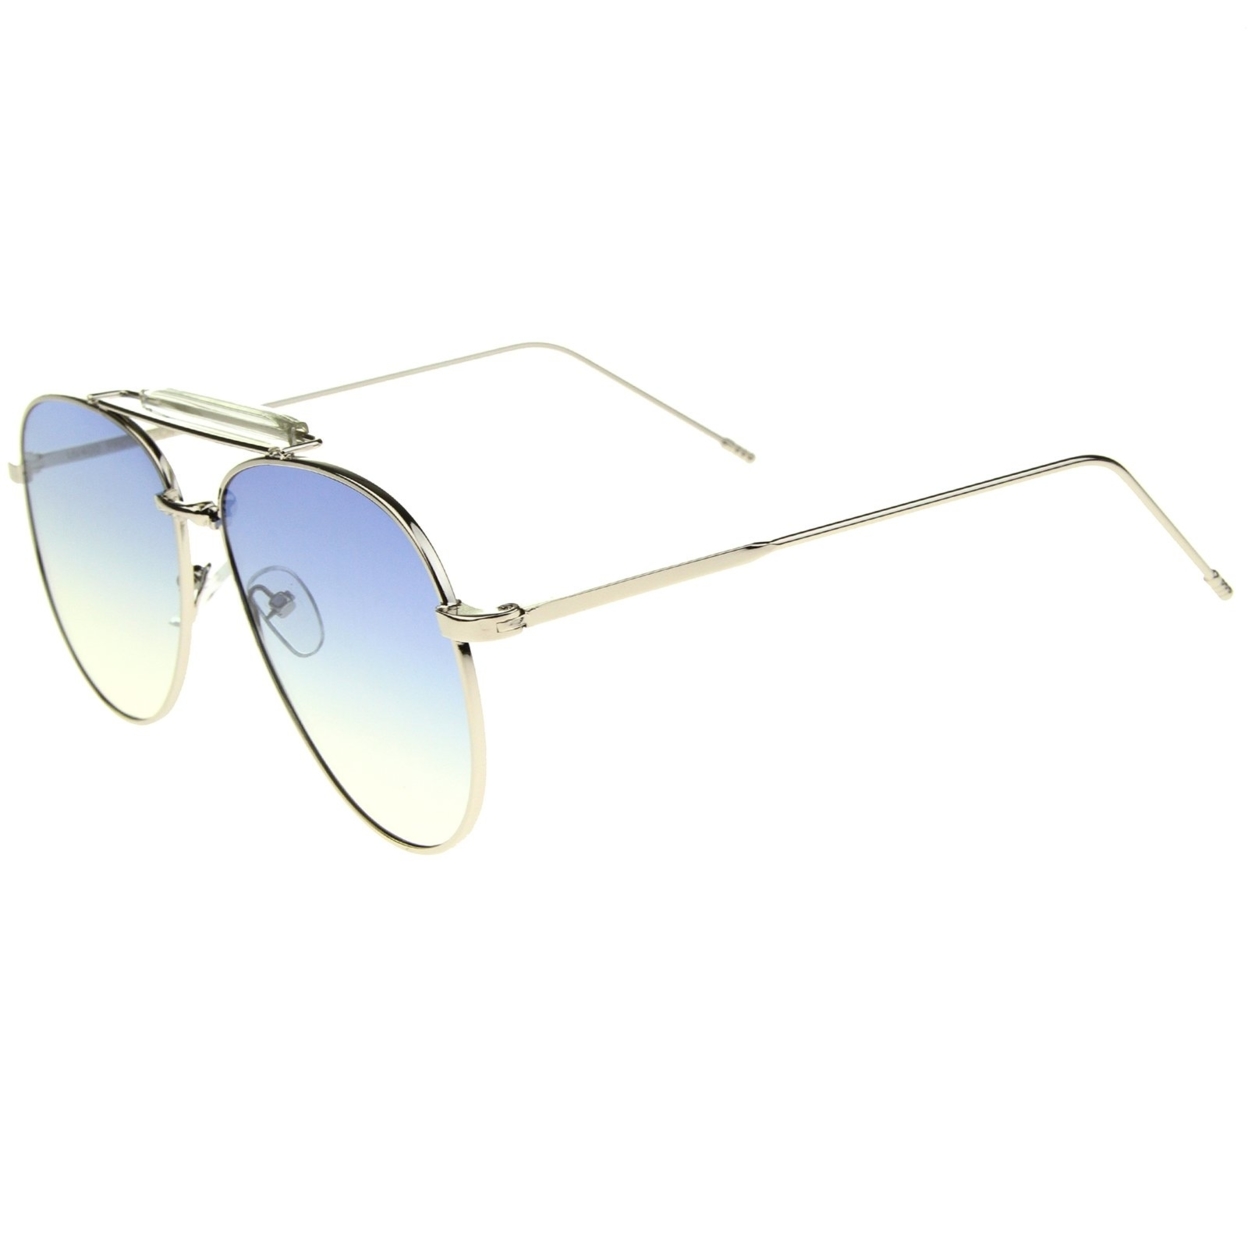 Large Classic Teardrop Crossbar Oceanic Flat Lens Aviator Sunglasses 56mm - Gunmetal-Black / Smoke-Green